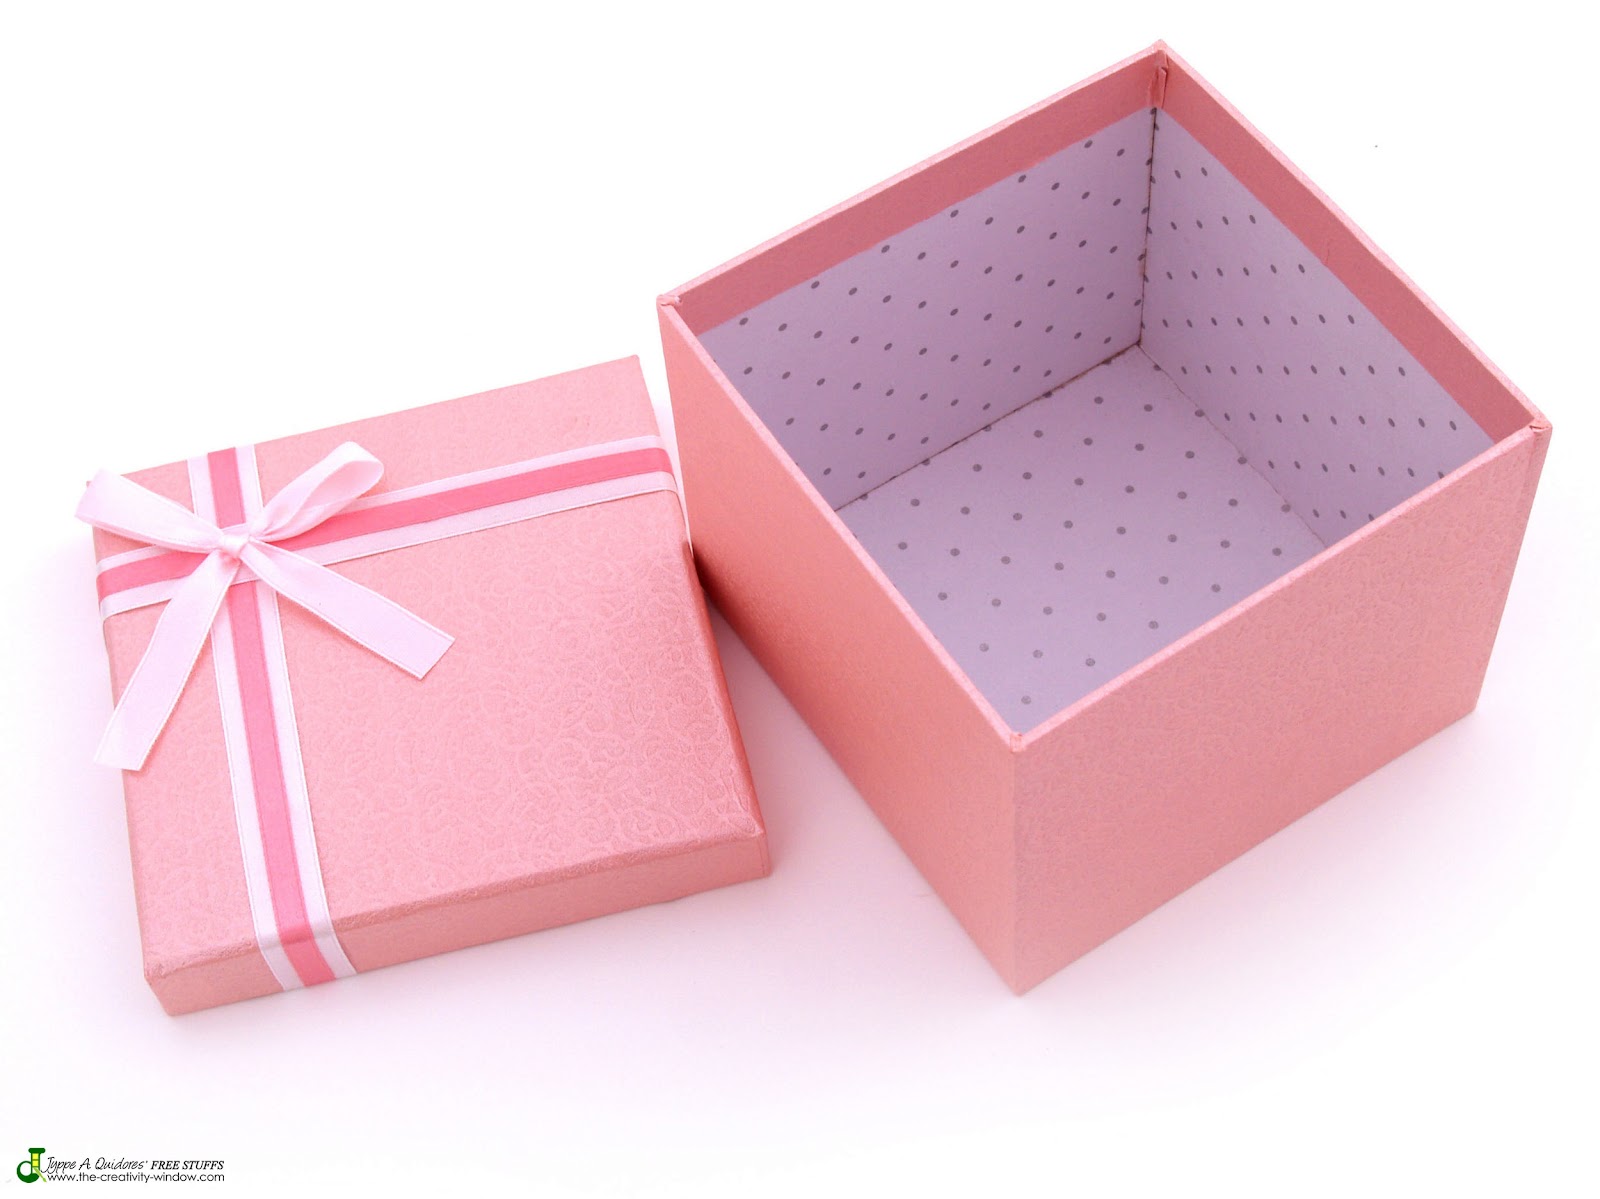 http://2.bp.blogspot.com/-irVFTizOt_M/T1dHPqwzOhI/AAAAAAAAAOk/sCLEhYEr_mk/s1600/Open+Pink+Gifft+Box+with+Pink+Ribbon+6.JPG